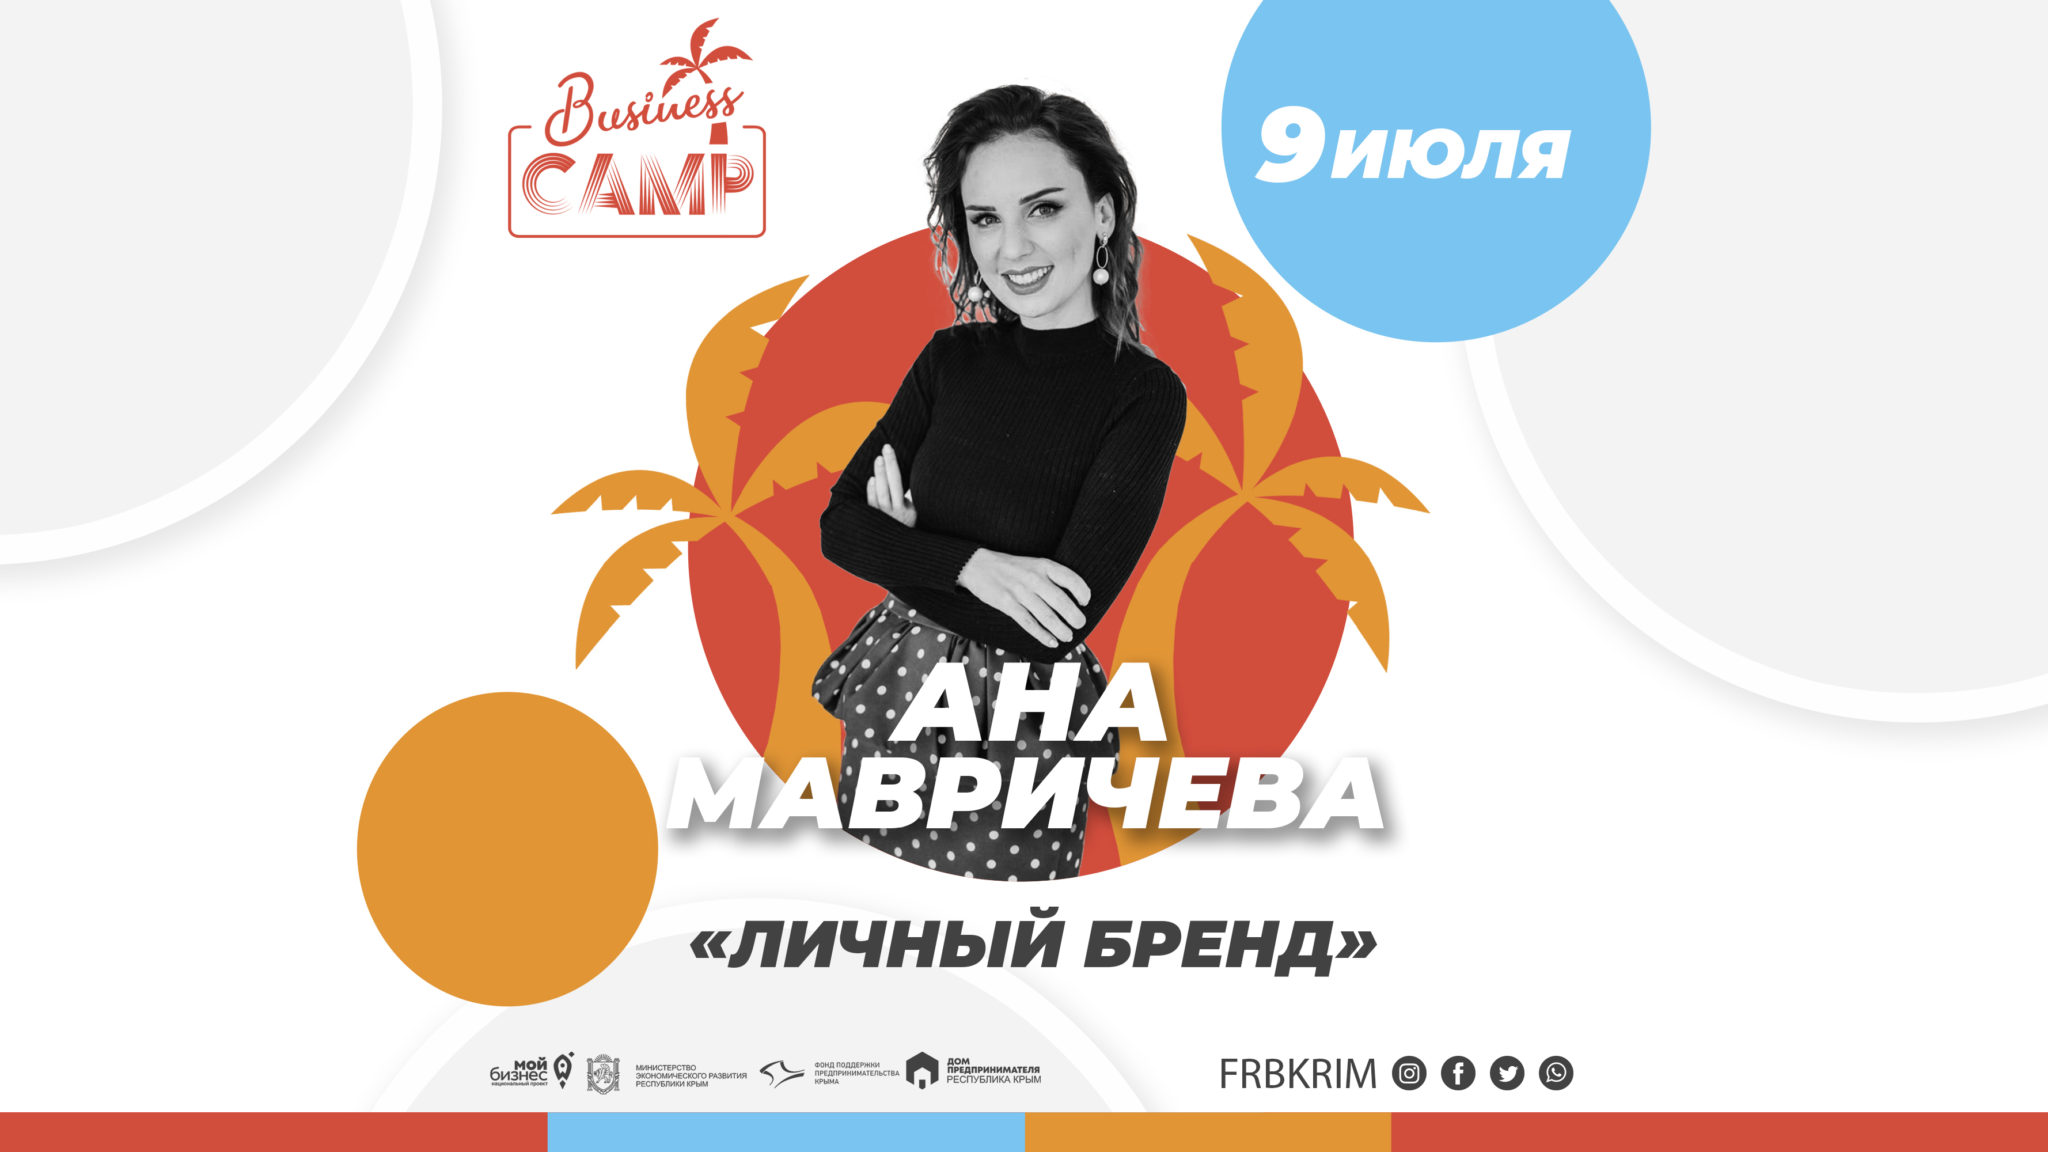 БИЗНЕС CAMP-2020. Ана Мавричева